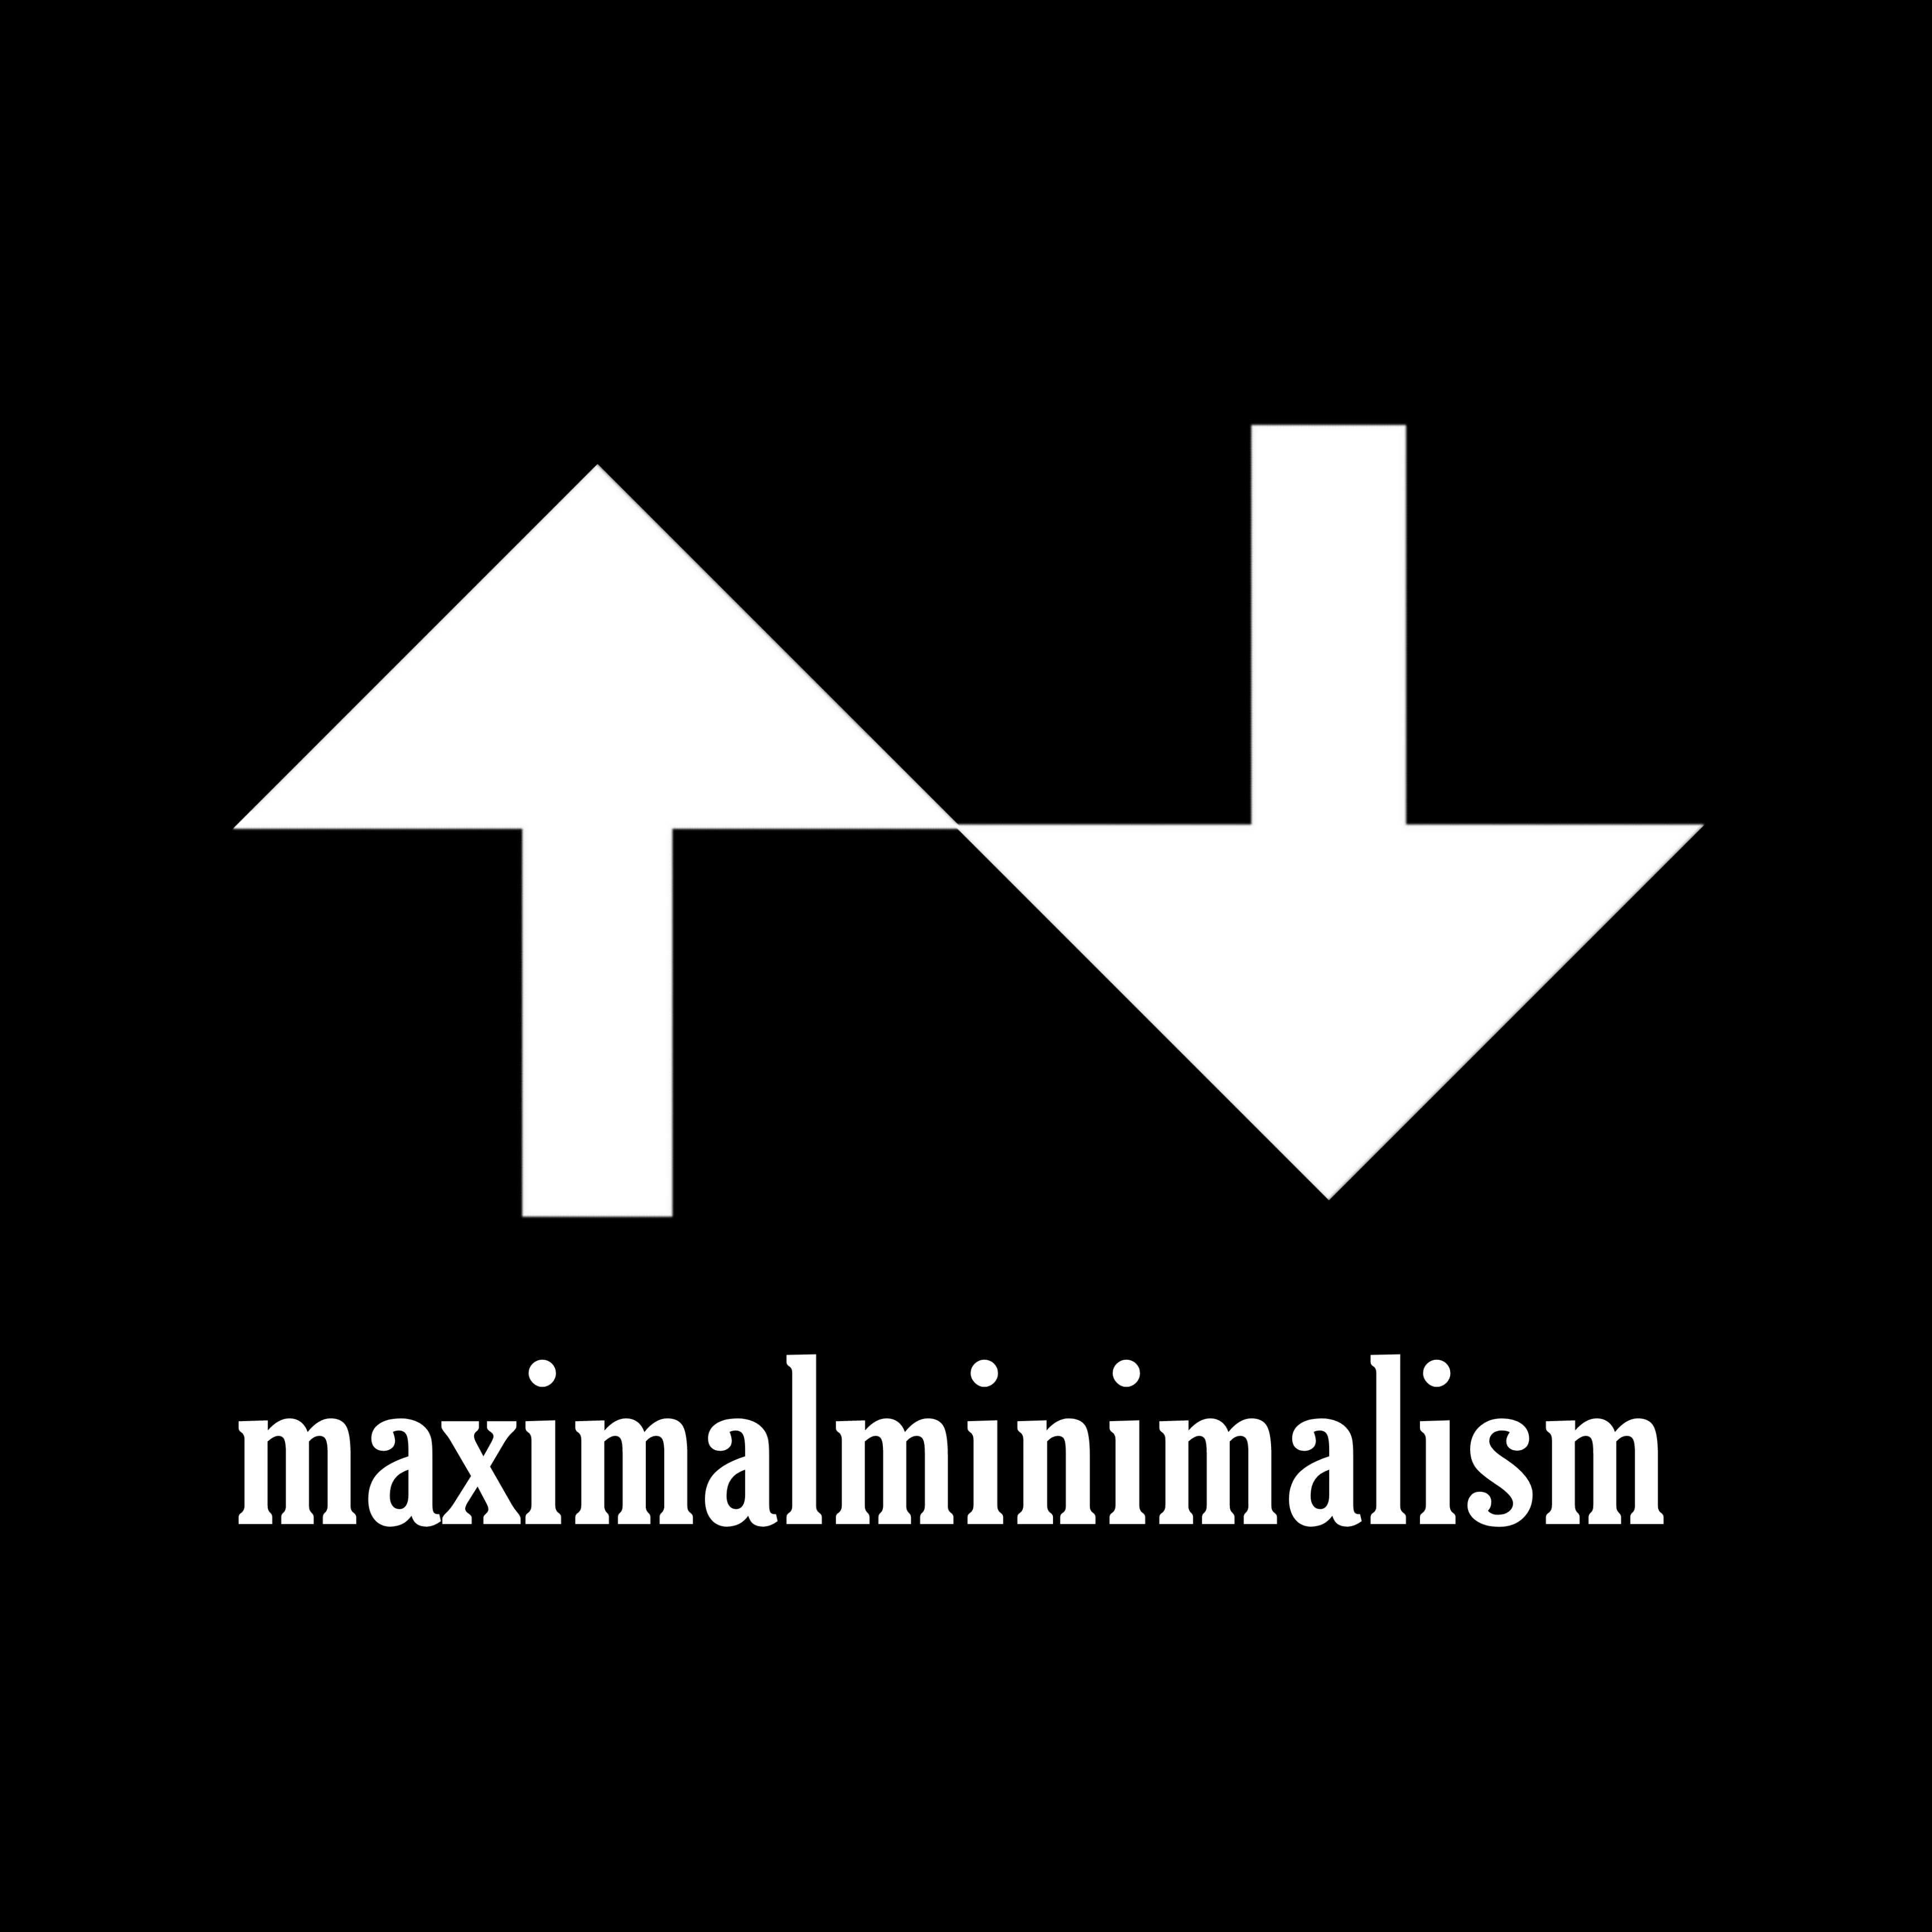 <b>Maximalminimalism</b><br/><br/>Minimal quantity for maximal quality.